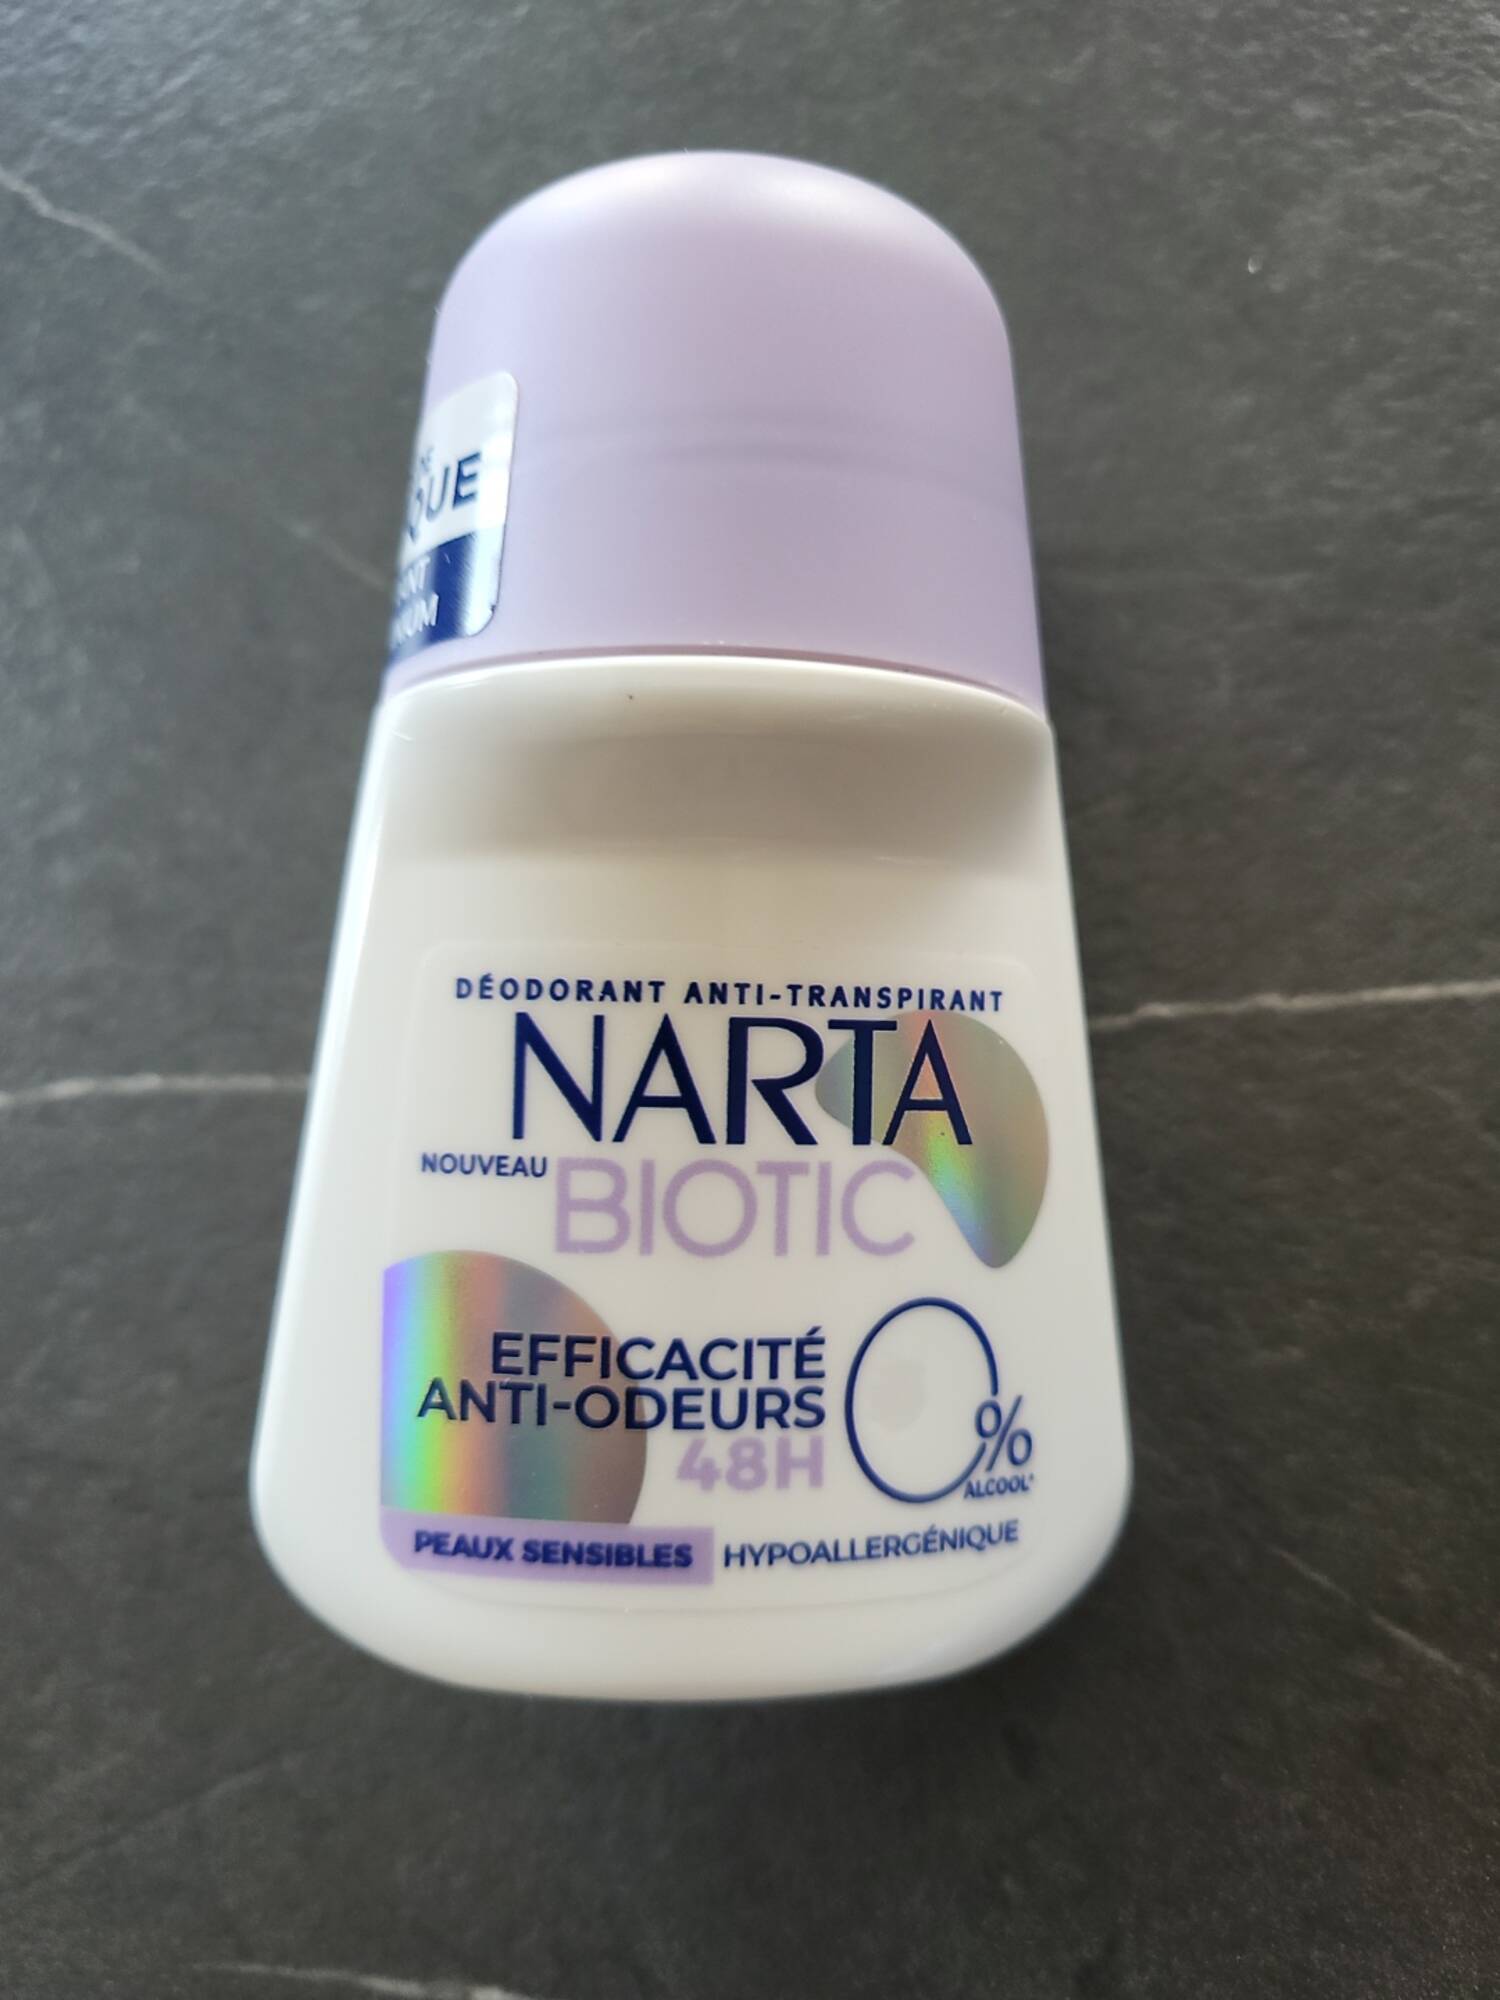 NARTA -  Biotic - Déodorant anti-transpirant 48h